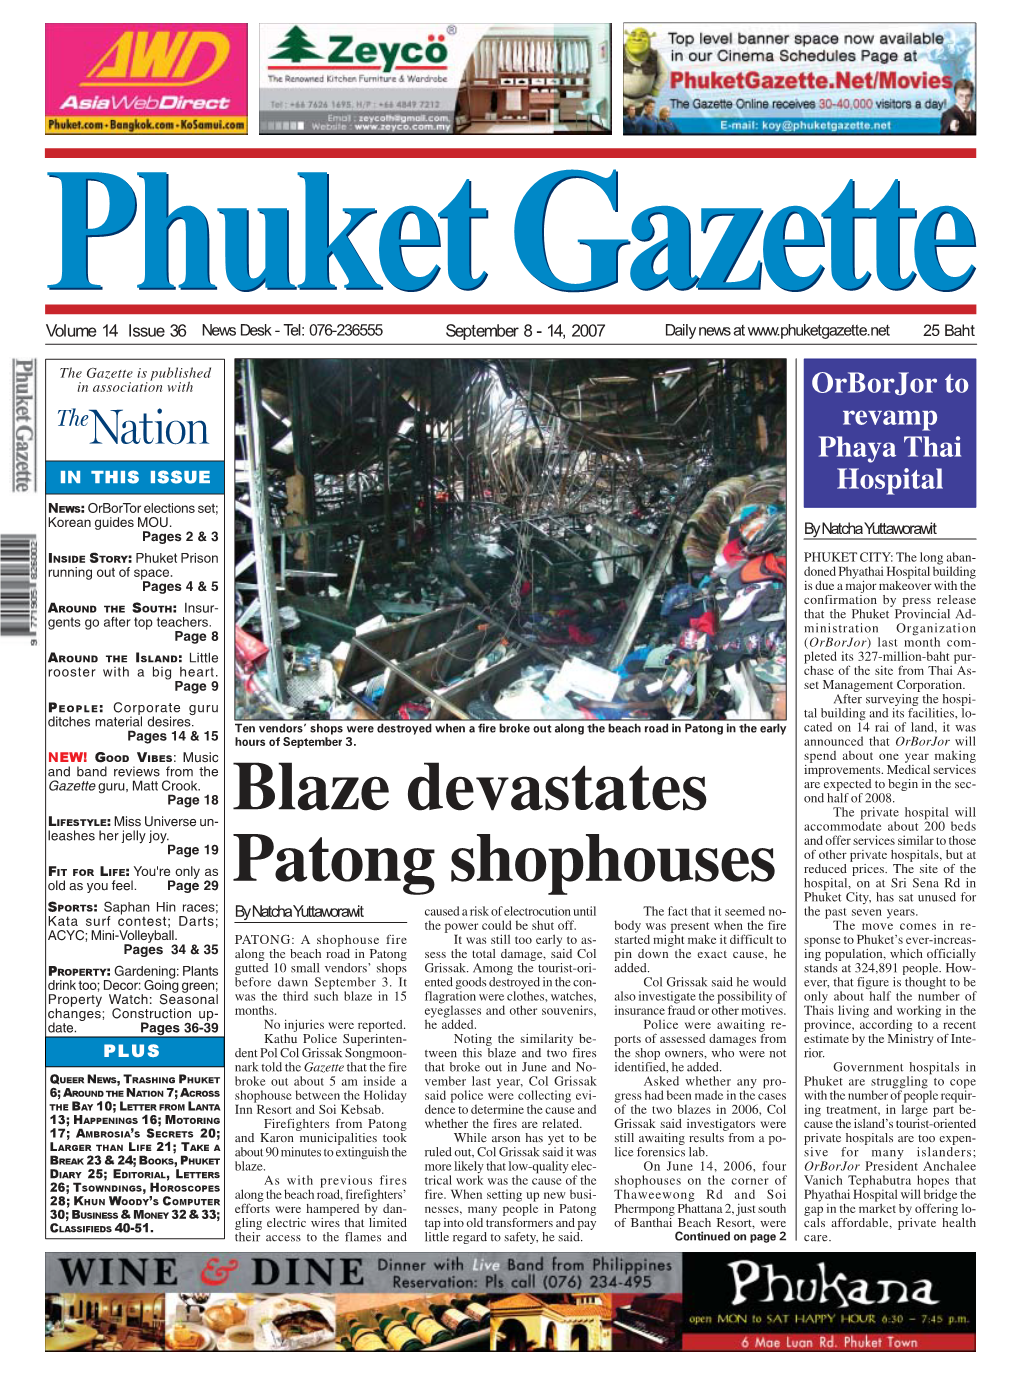 Blaze Devastates Patong Shophouses